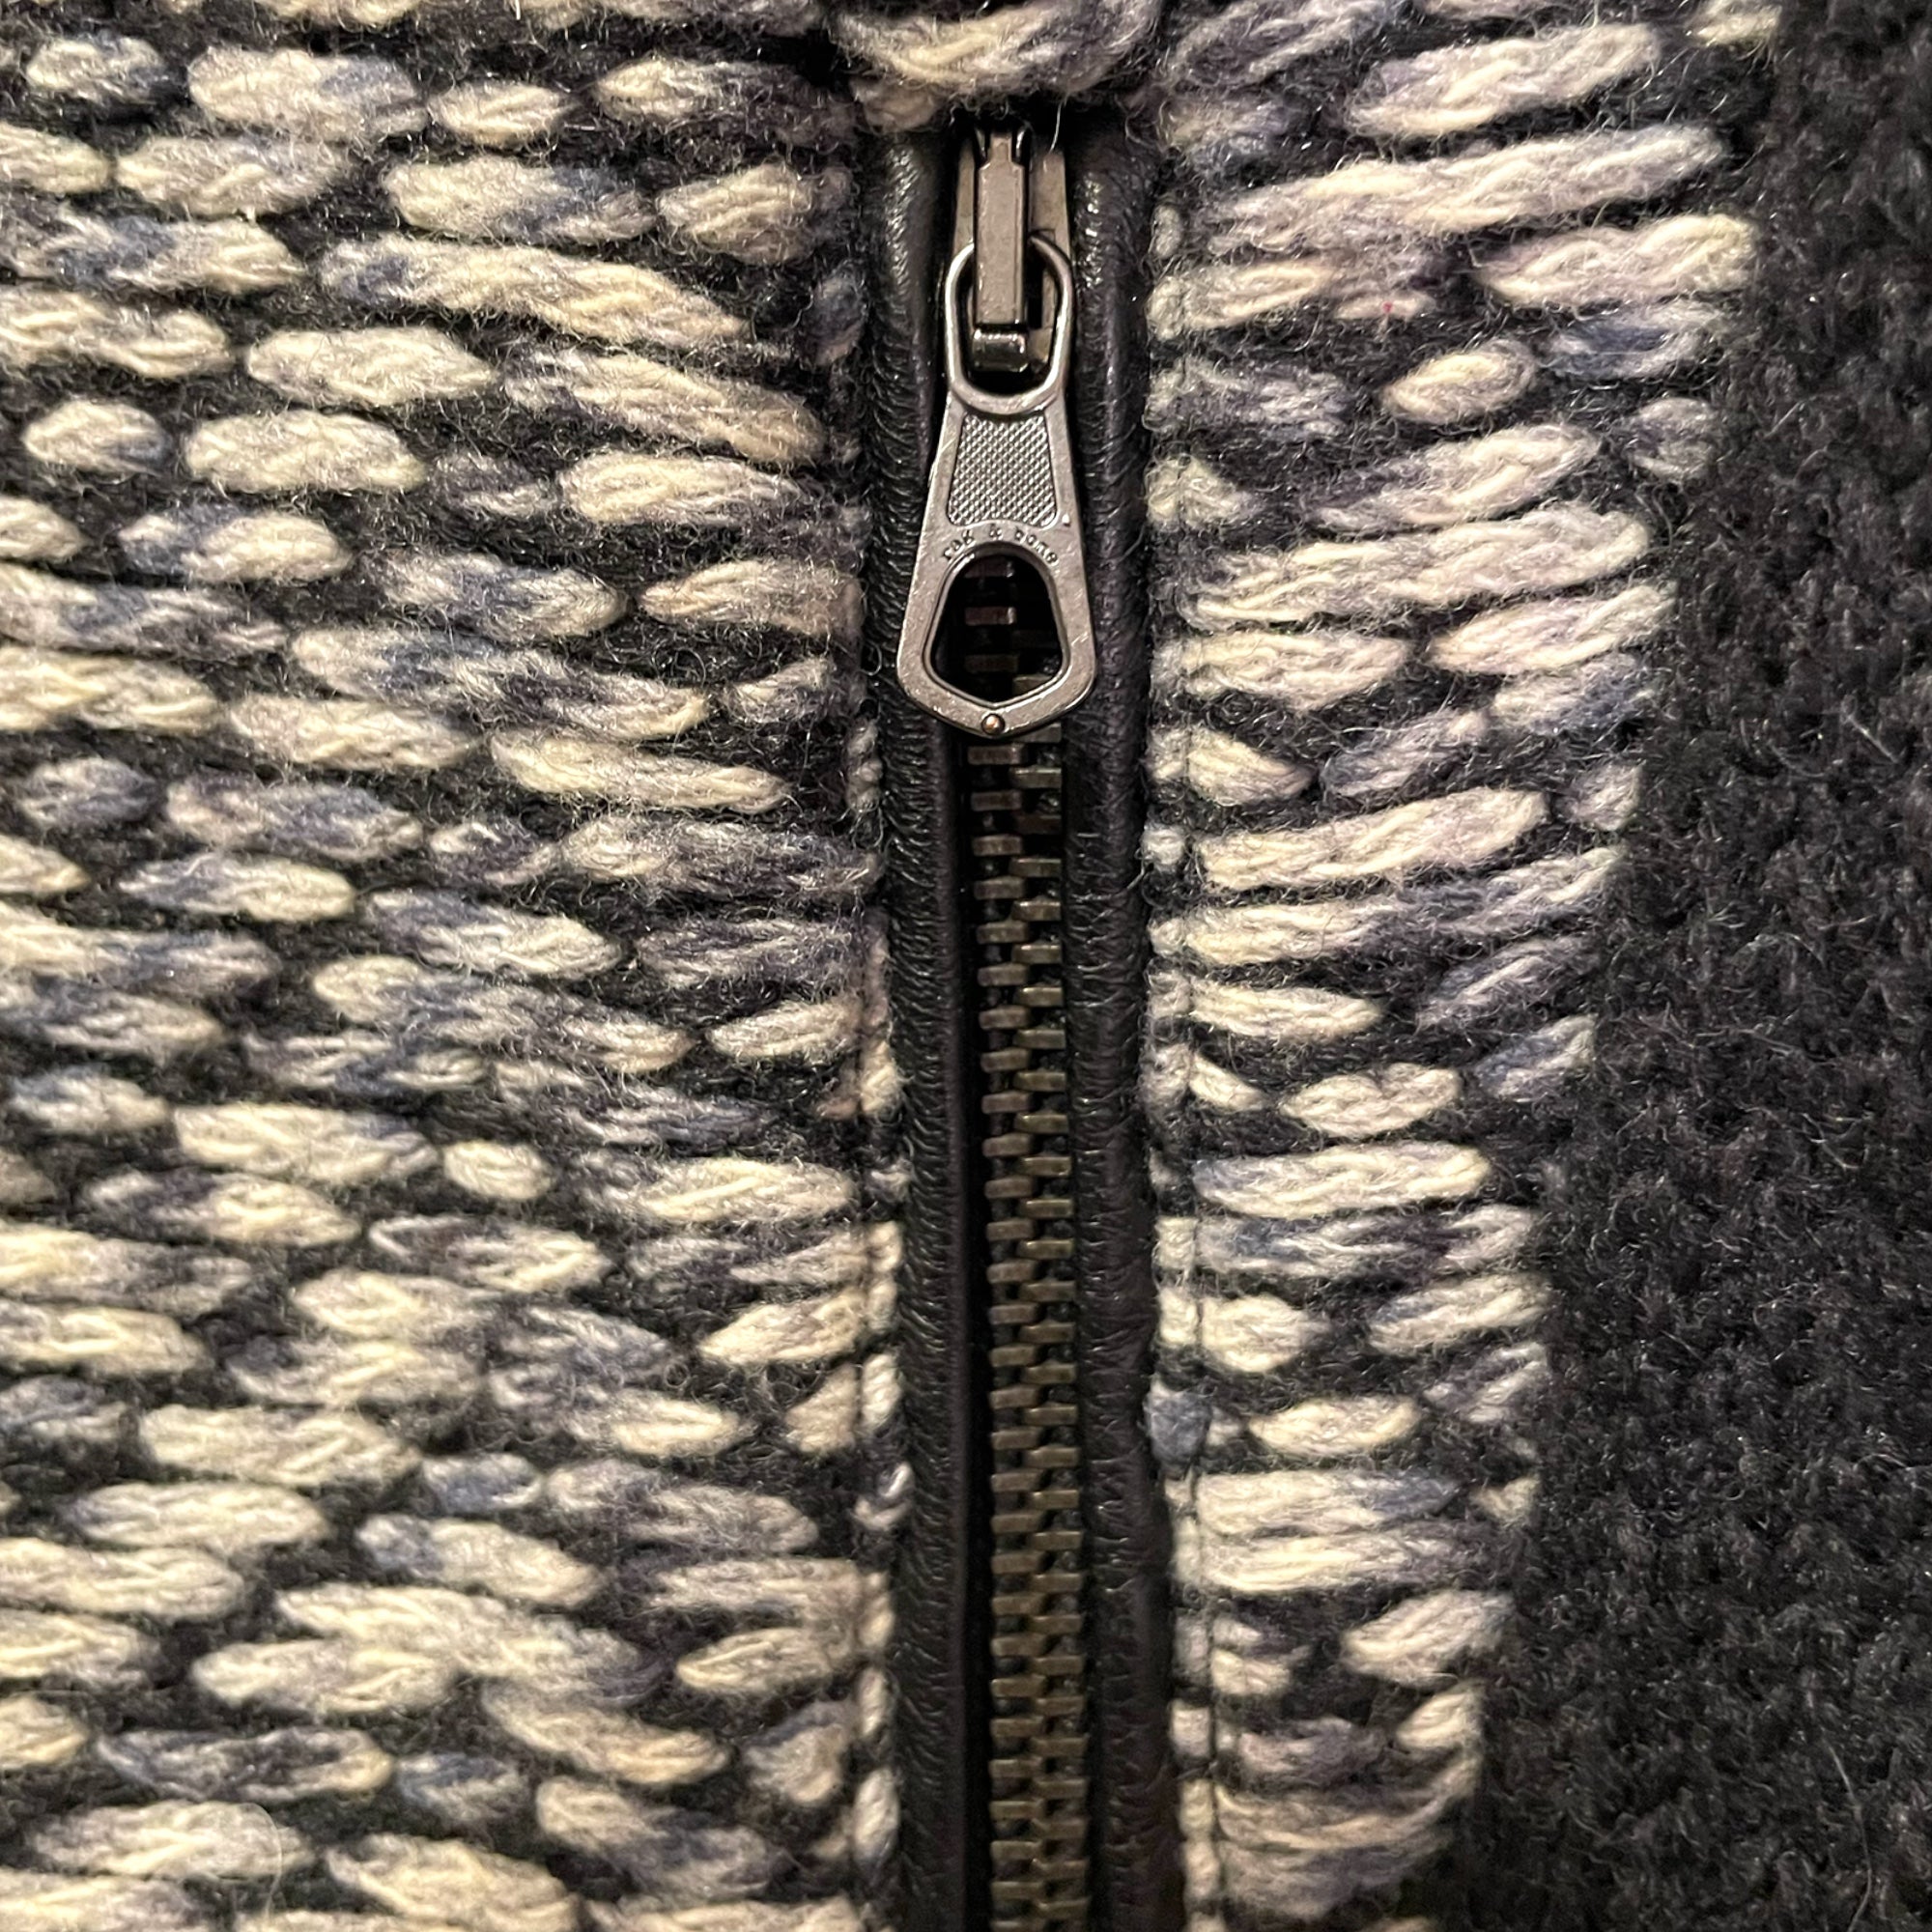 Rag & Bone Wool with Lamb Leather Trim Jacket |Size: XS|